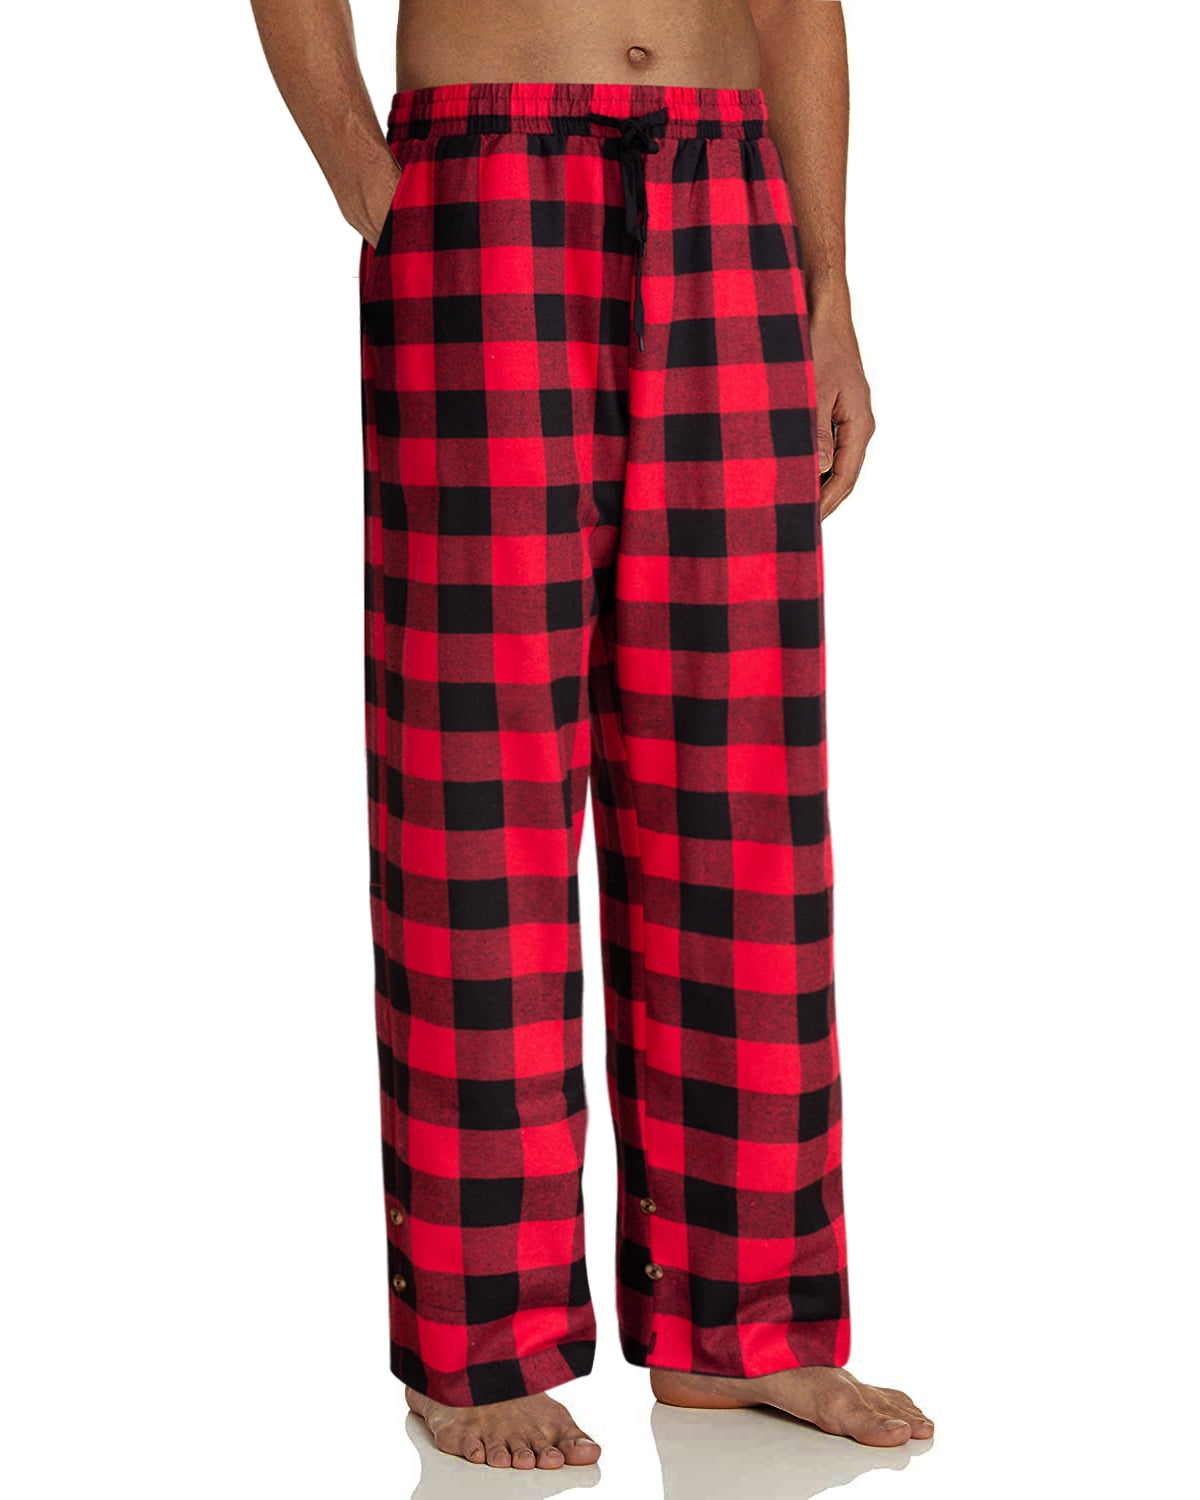 J.VER Mens Pajama Pants Plaid Heavyweight Flannel Sleep Lounge Cotton Bottoms Sleepwear 